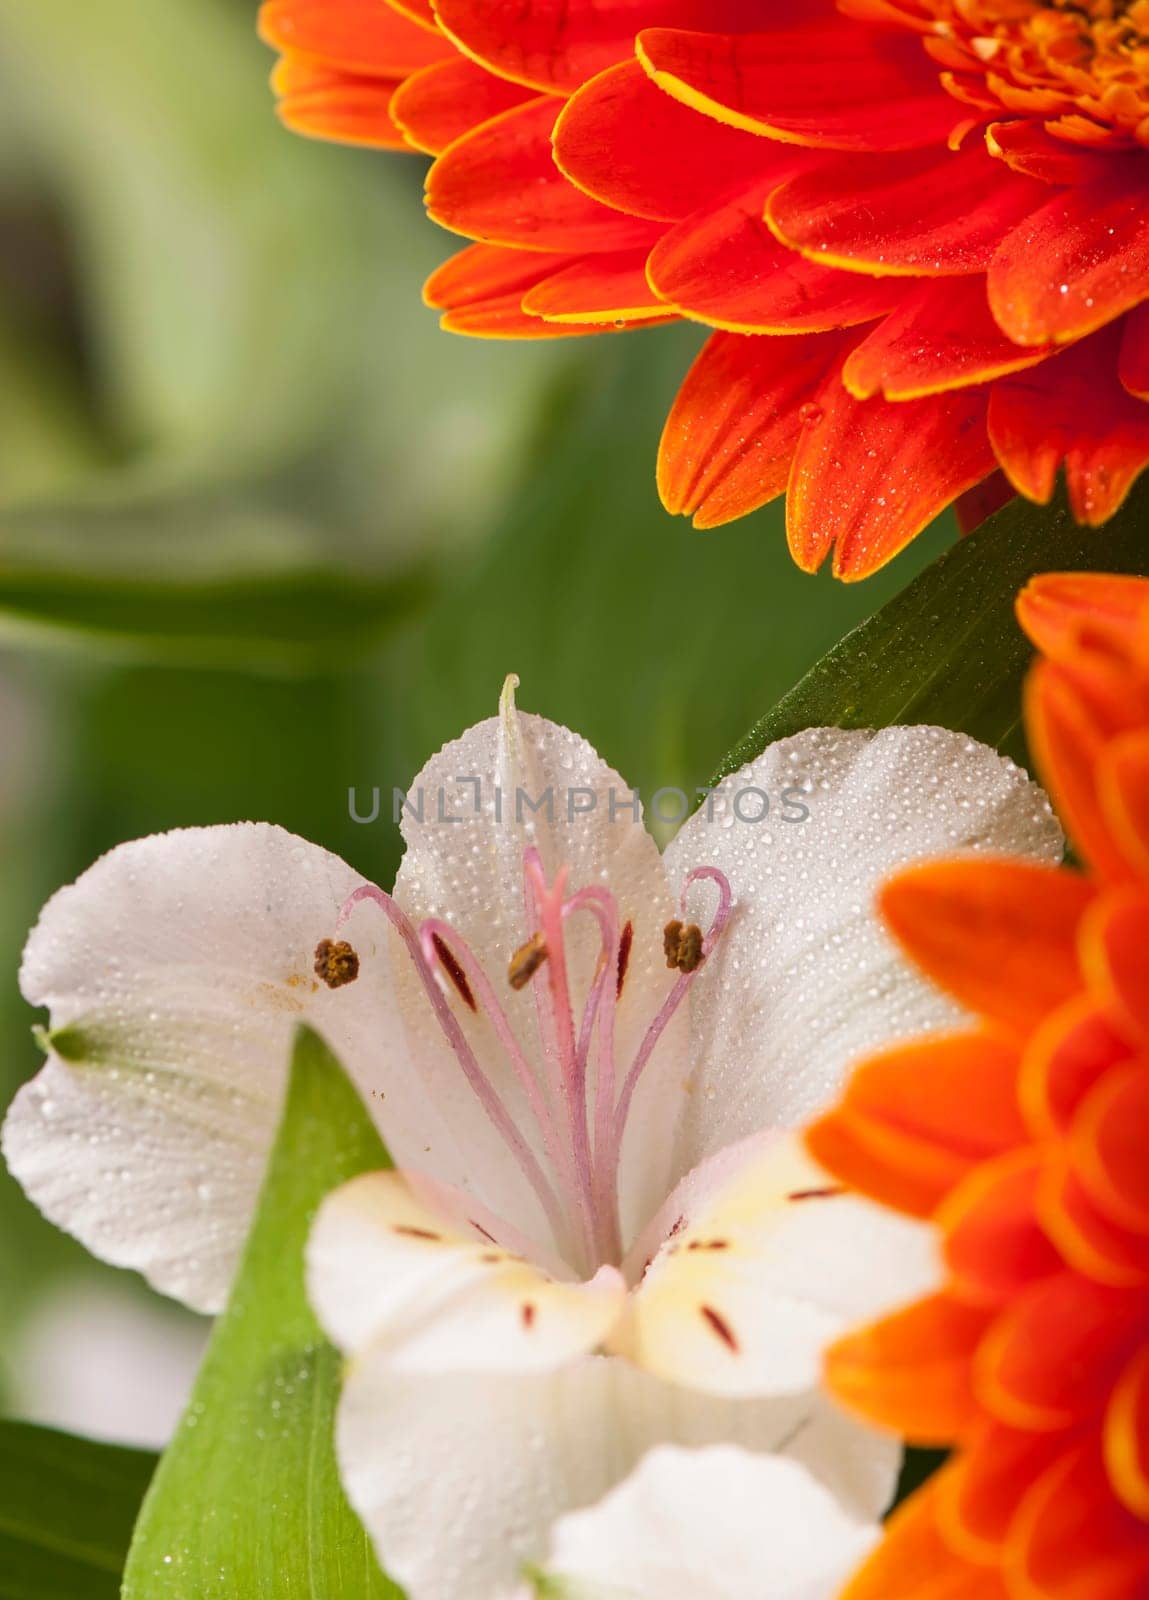 Orange gerbera flower against green blurred background by aprilphoto